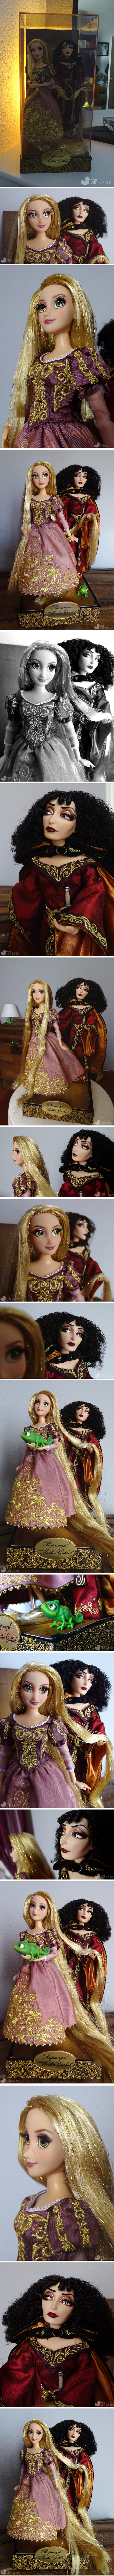 Disney Fairytale Designer Collection (depuis 2013) - Page 22 Rapunzel-gothel-all